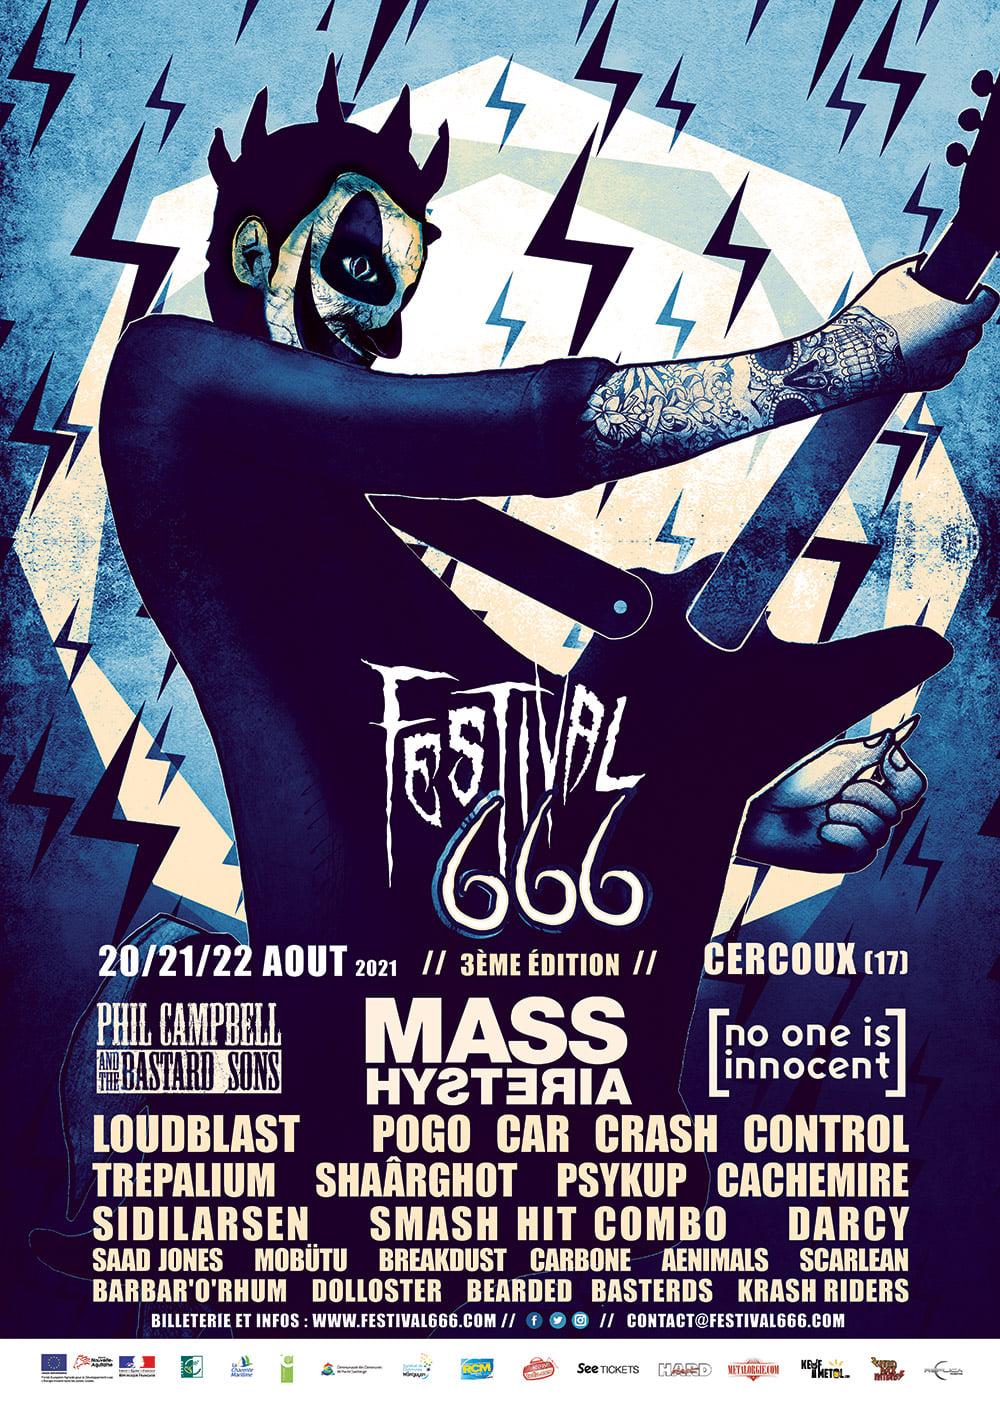 Festival 666 line up